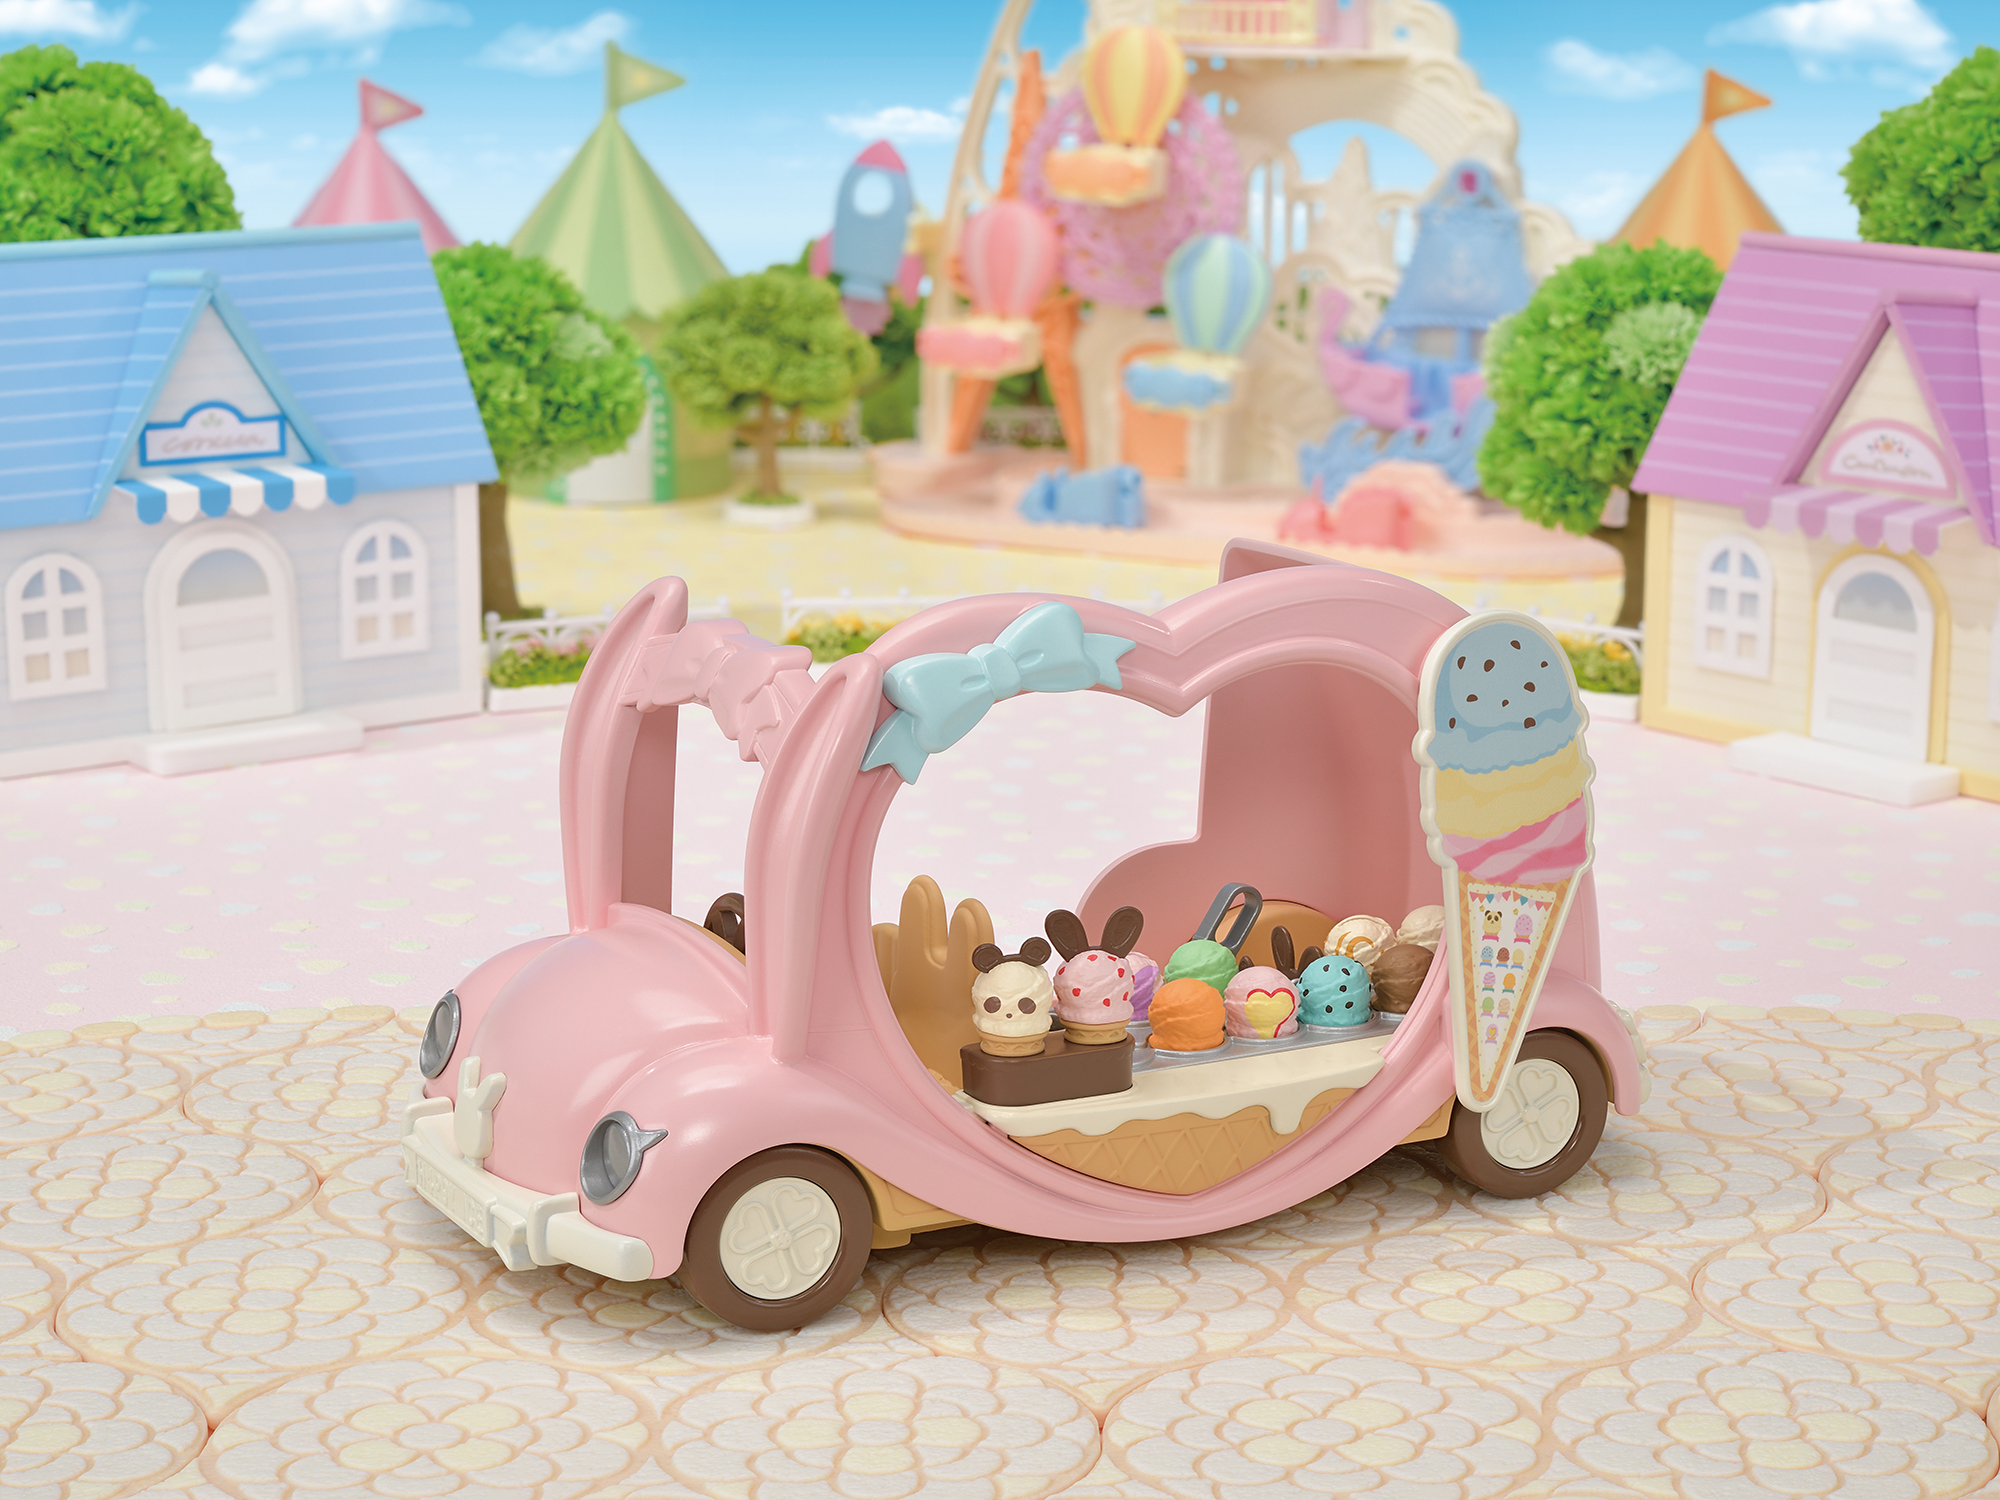 The pastel pink Ice Cream Van 